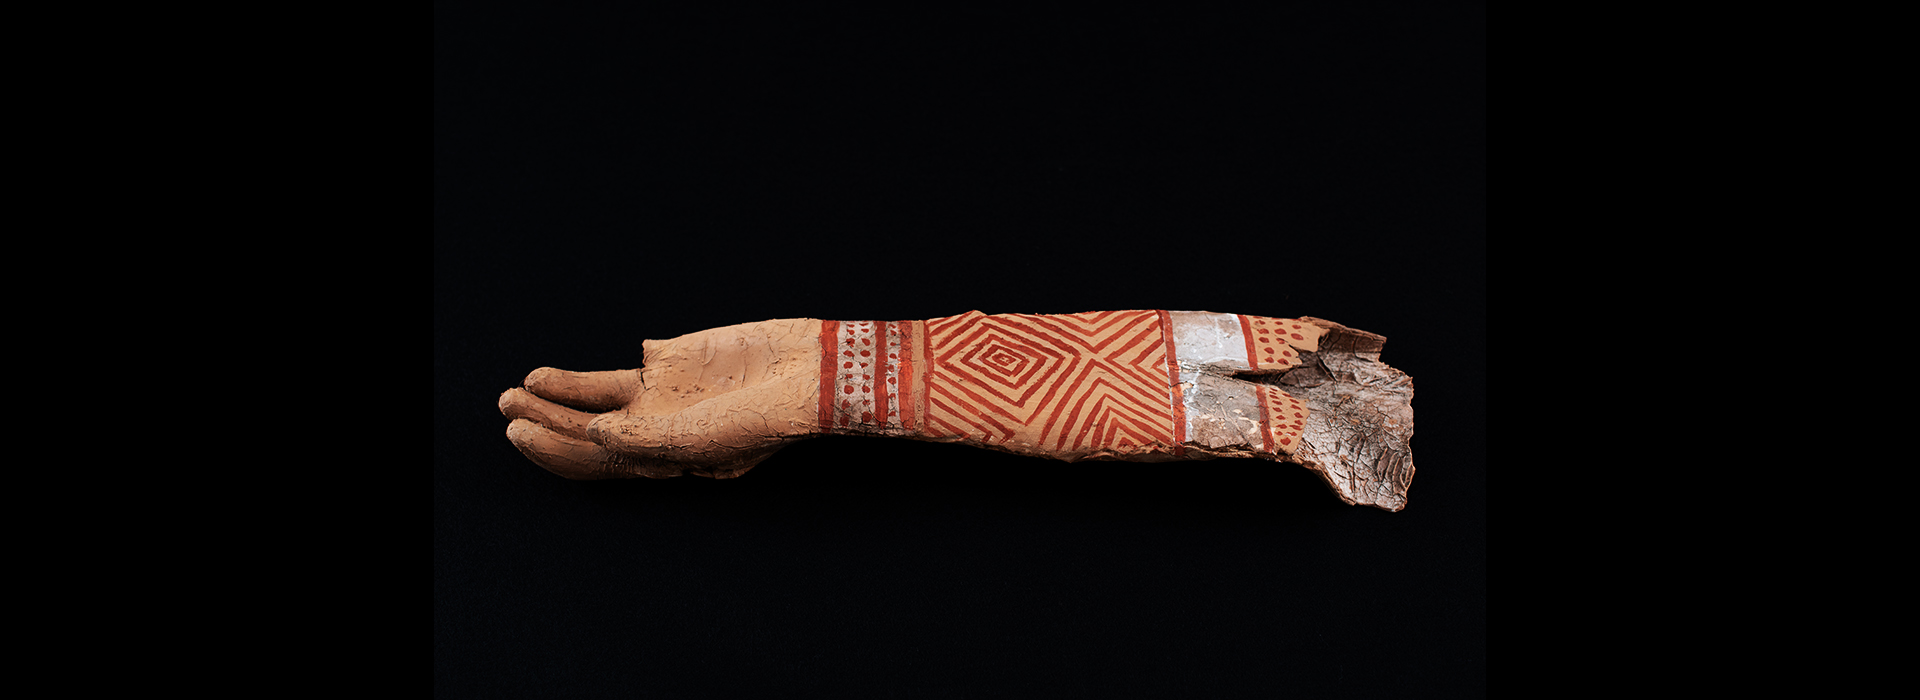 Ceramic tattooed arm made to look like an artifact